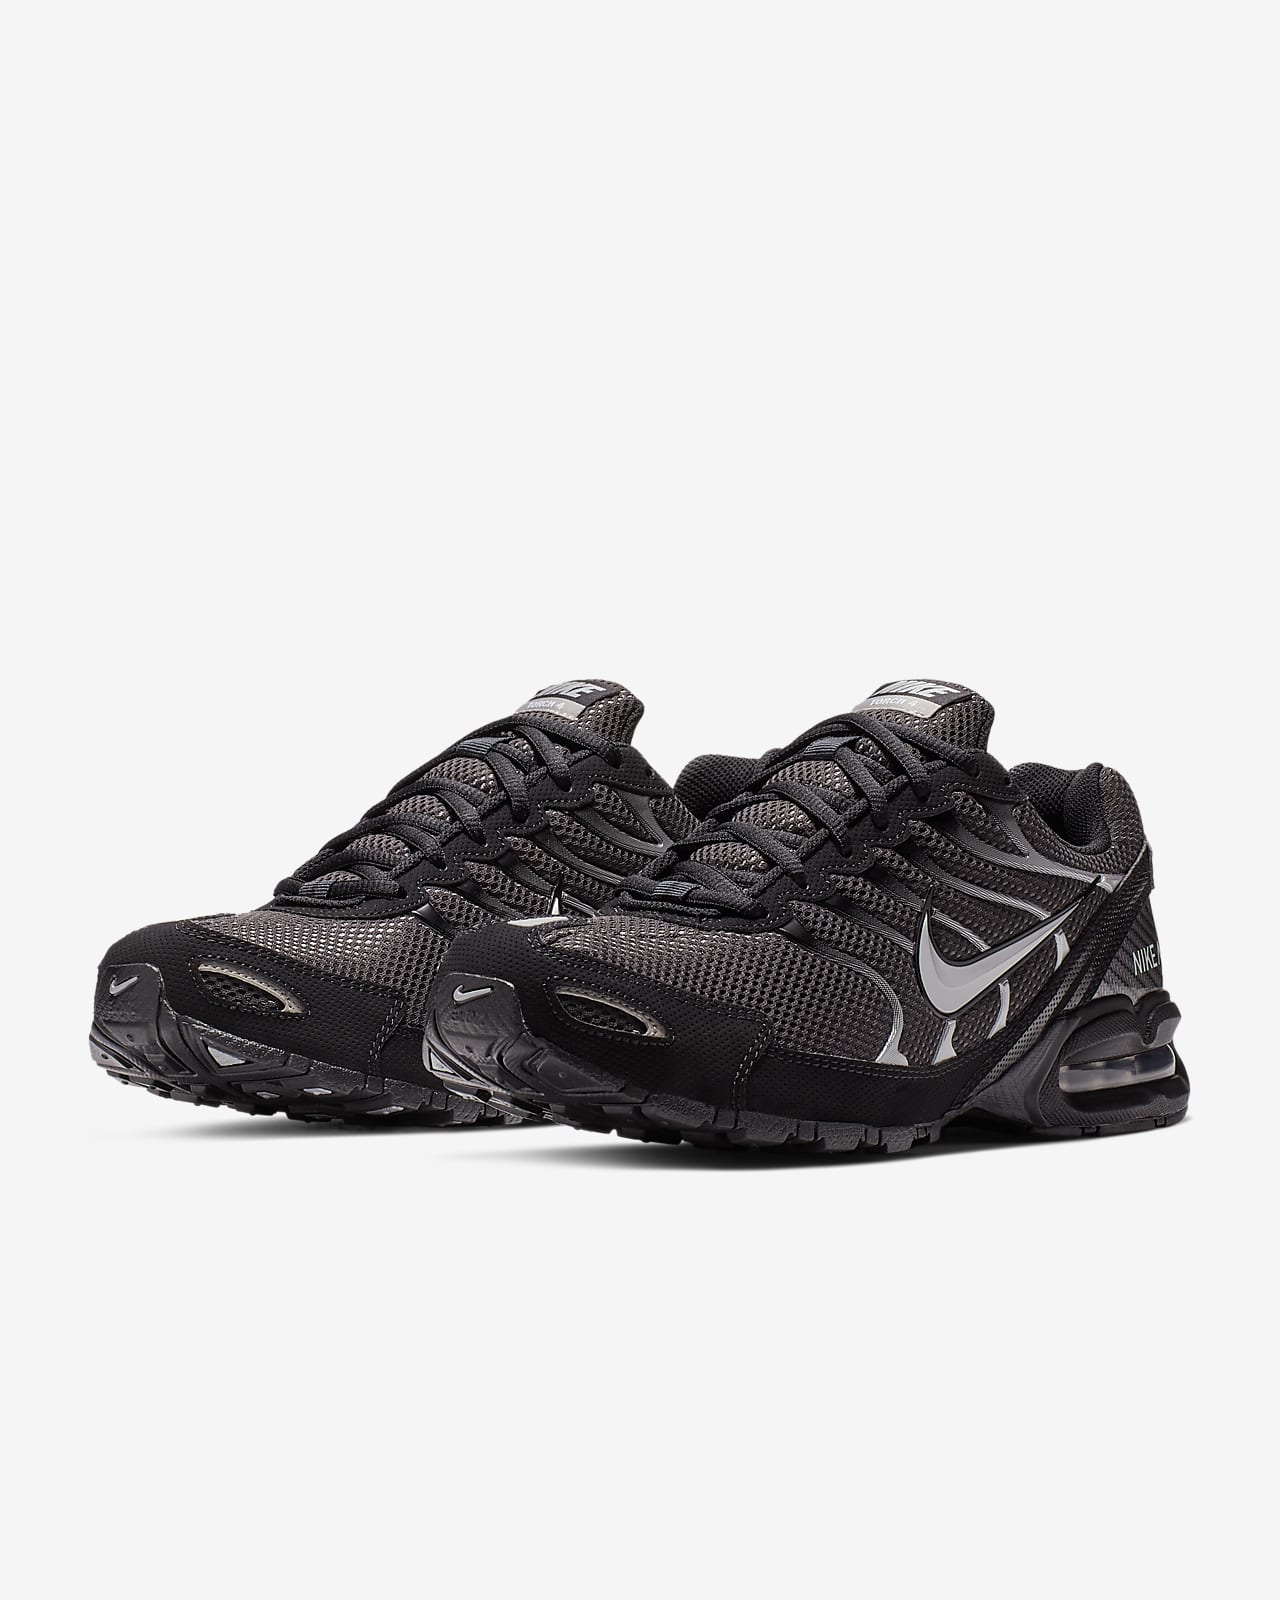 Nike Air Max Torch 4 Men's Running Shoe 